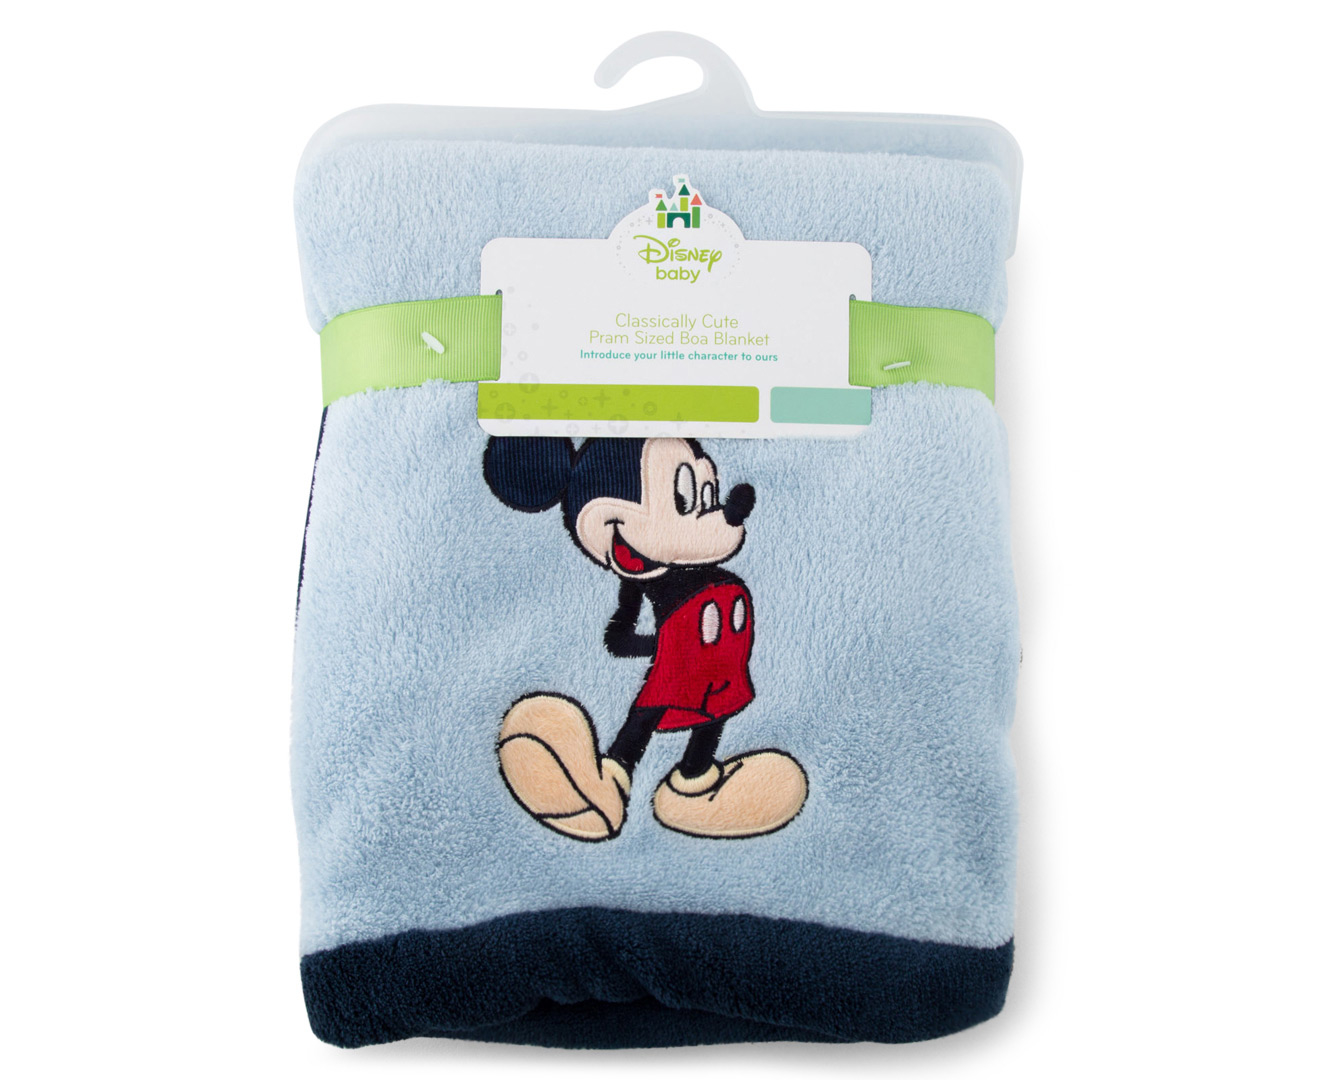 Disney Baby Classically Cute Pram Sized Boa Blanket - Blue